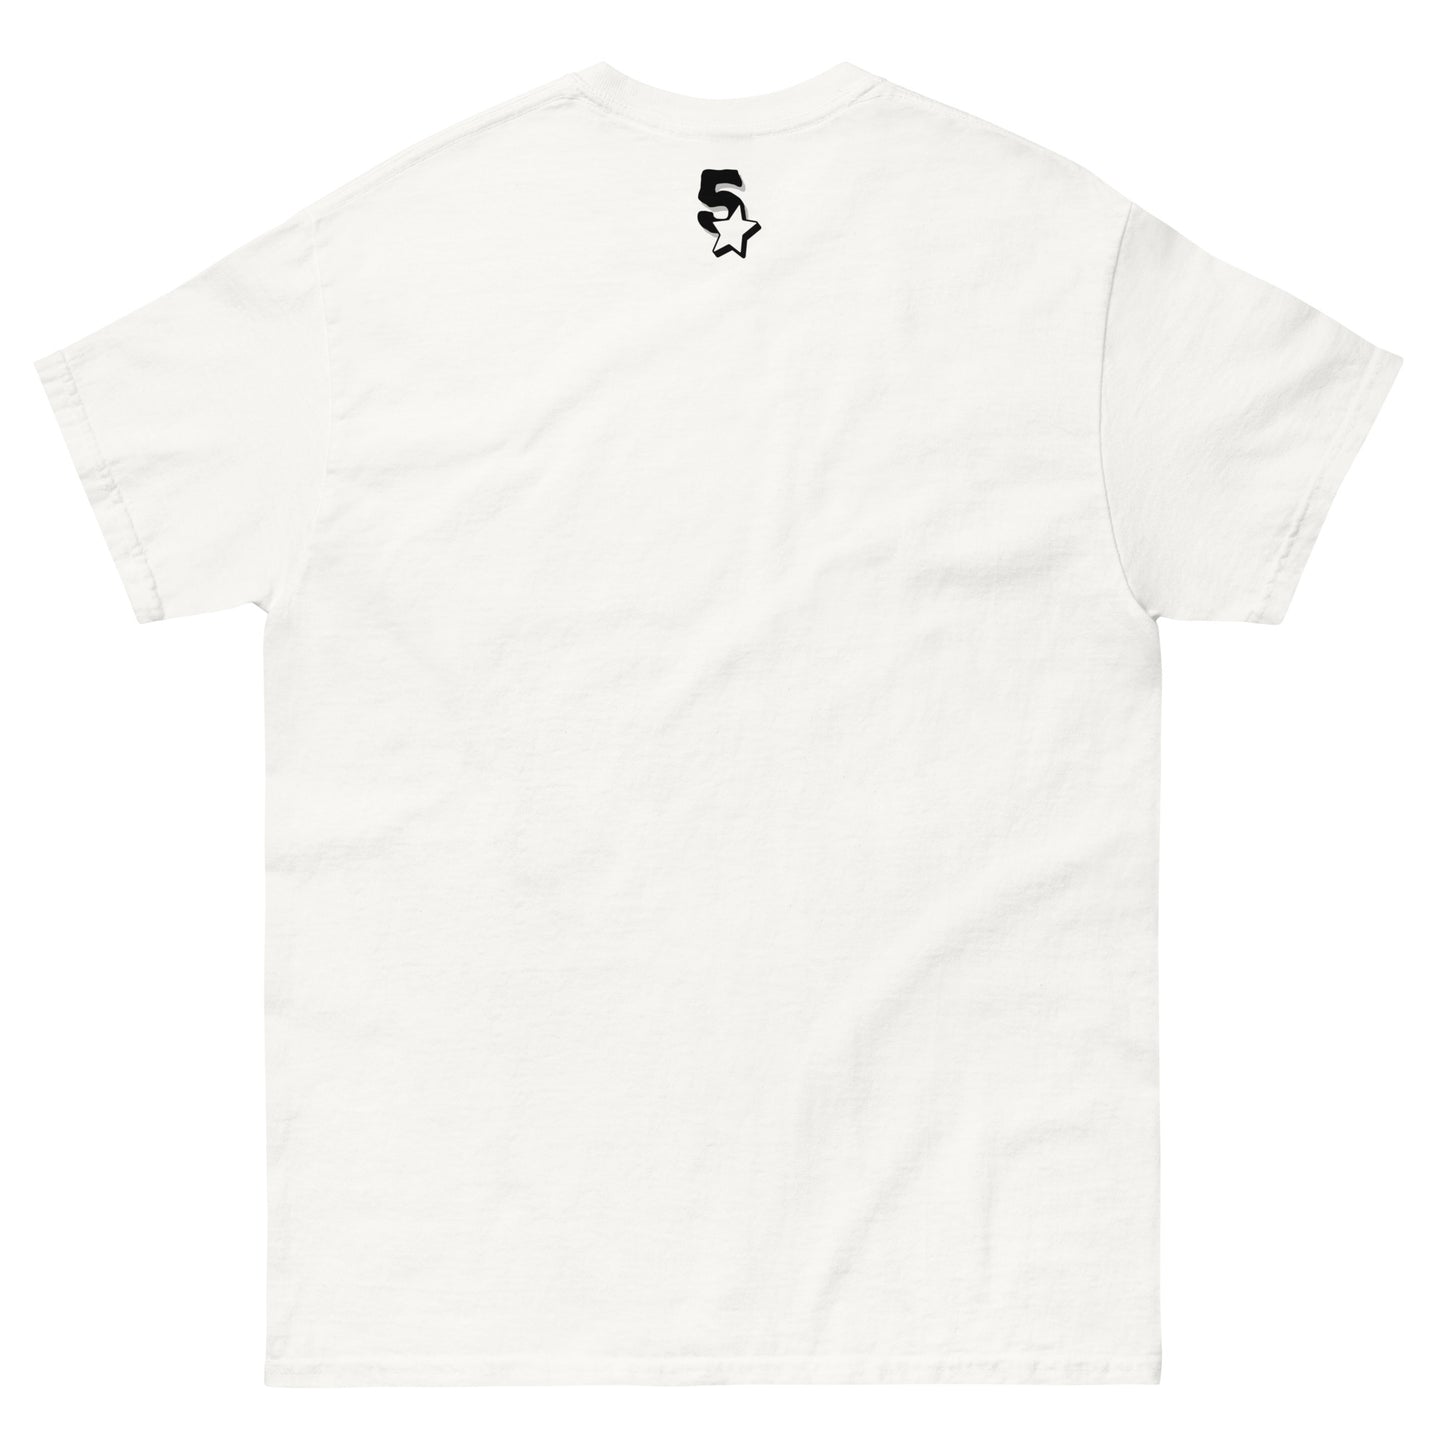 Fivestrz - Innocent's Essential T-shirt